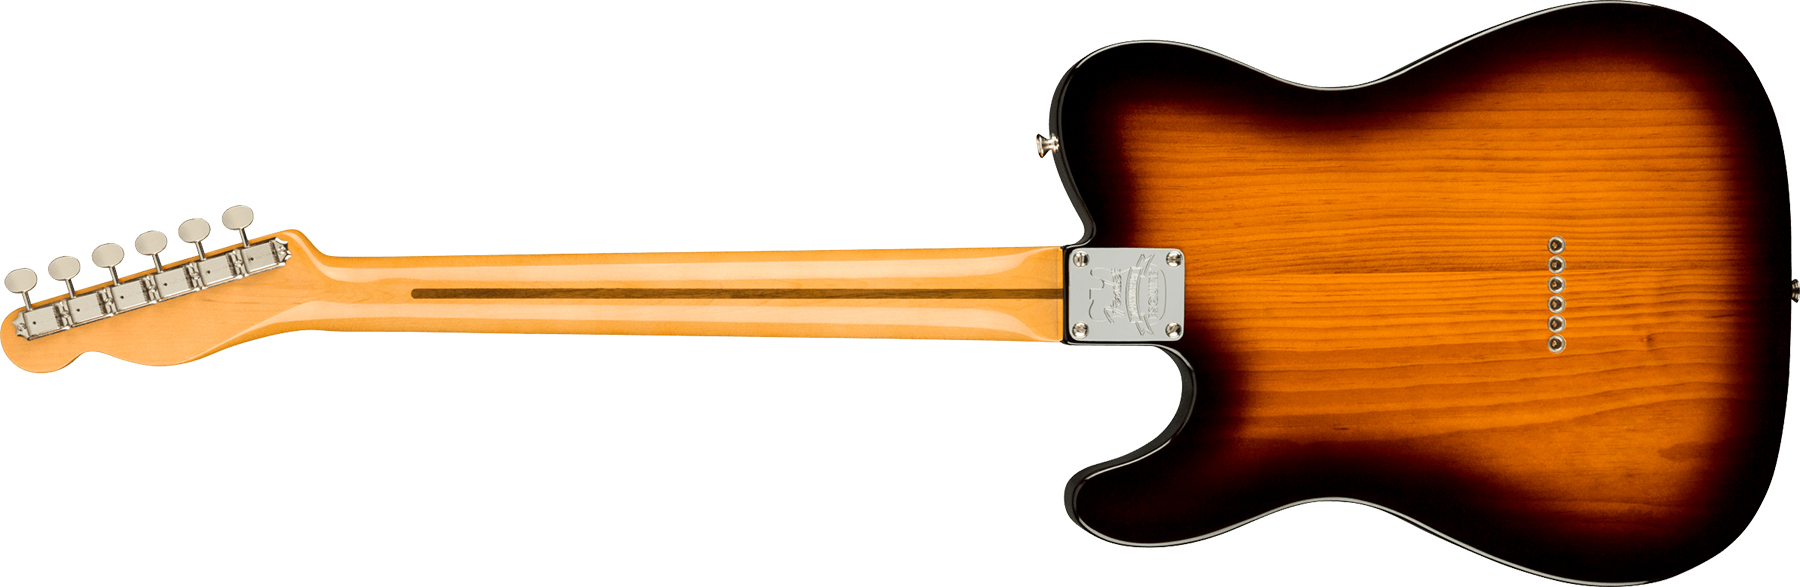 Fender Esquire/tele 70th Anniversary Usa Mn - 2-color Sunburst - Guitarra eléctrica con forma de tel - Variation 1